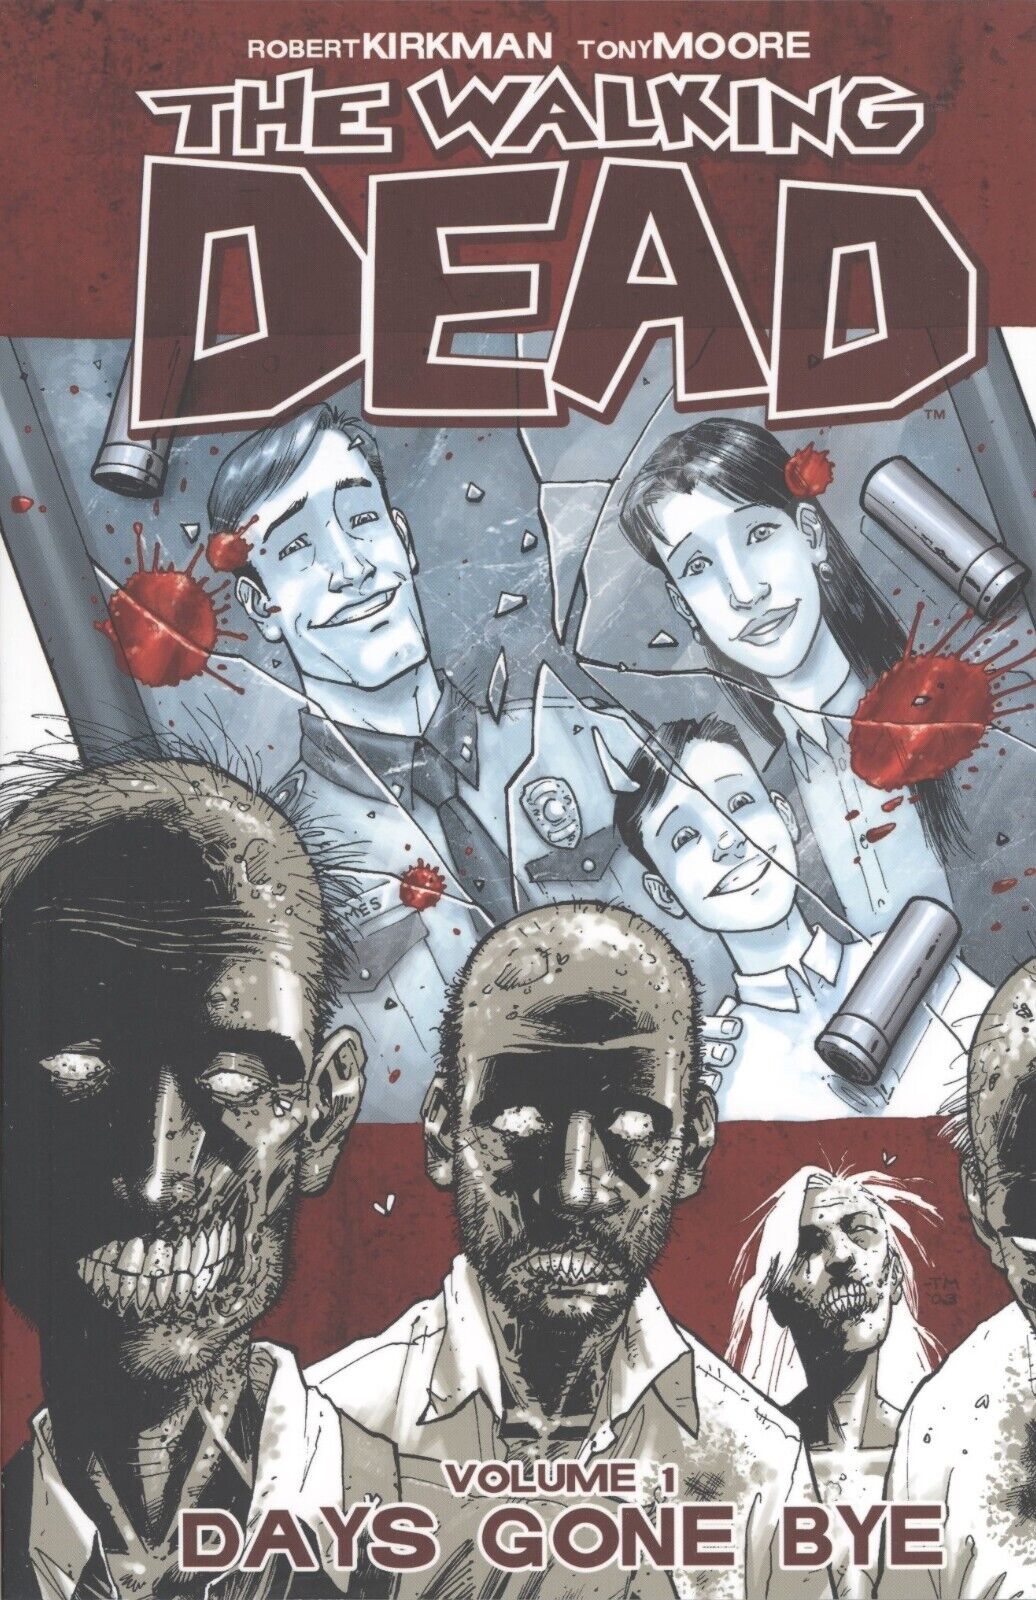 The Walking Dead Volume 1 Trade Paperback. Stock Image